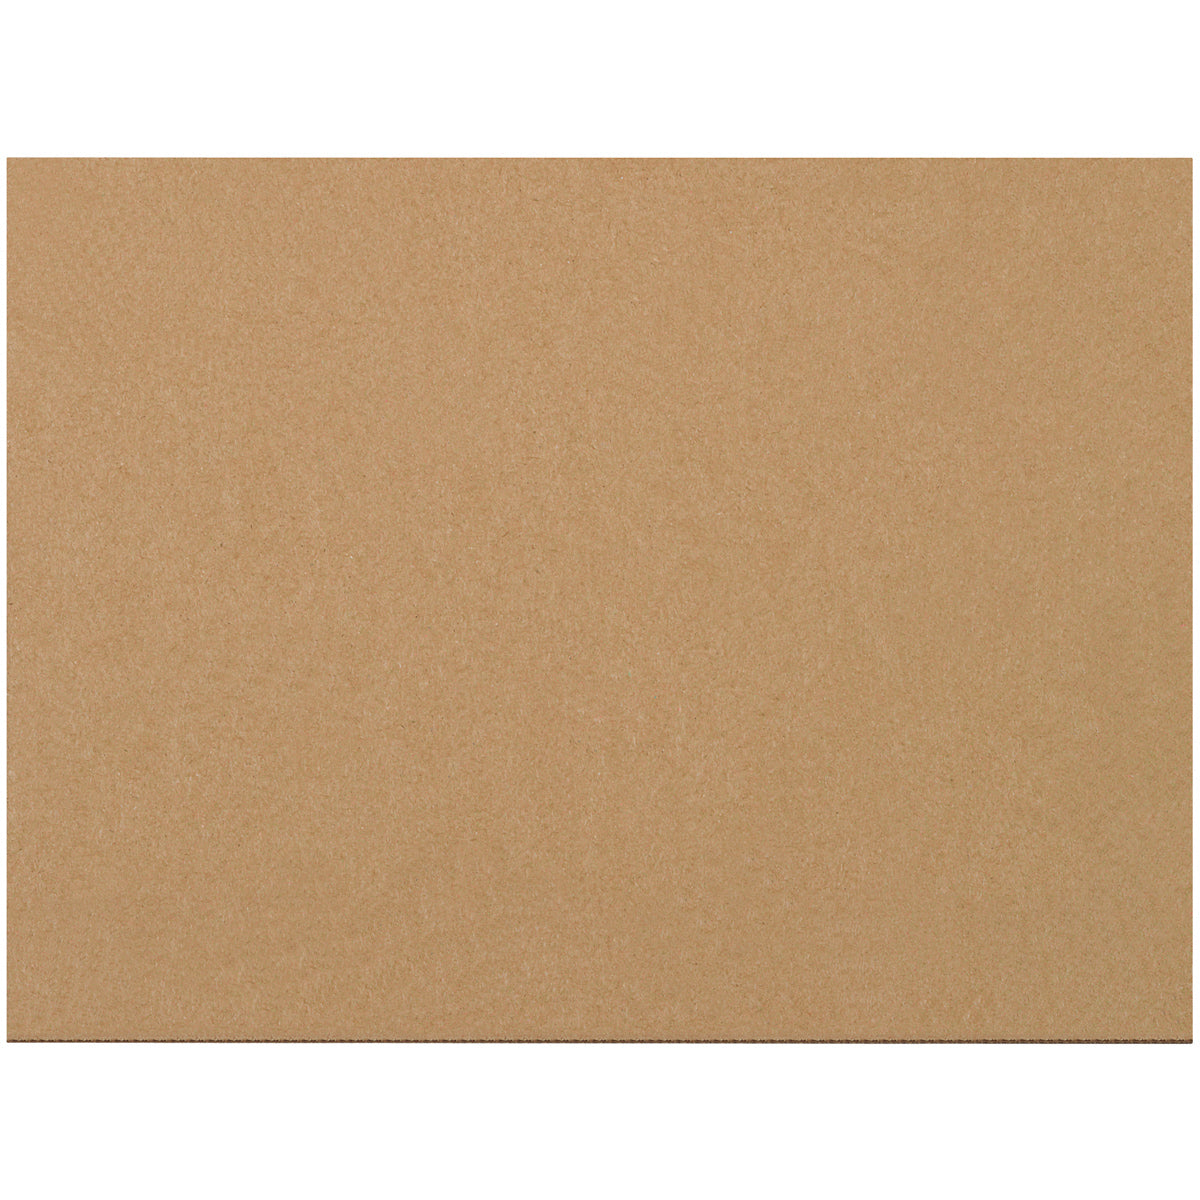 5 - Cardboard Sheets 24 x 36 Corrugated Kraft 5/32 Thick Single Wall